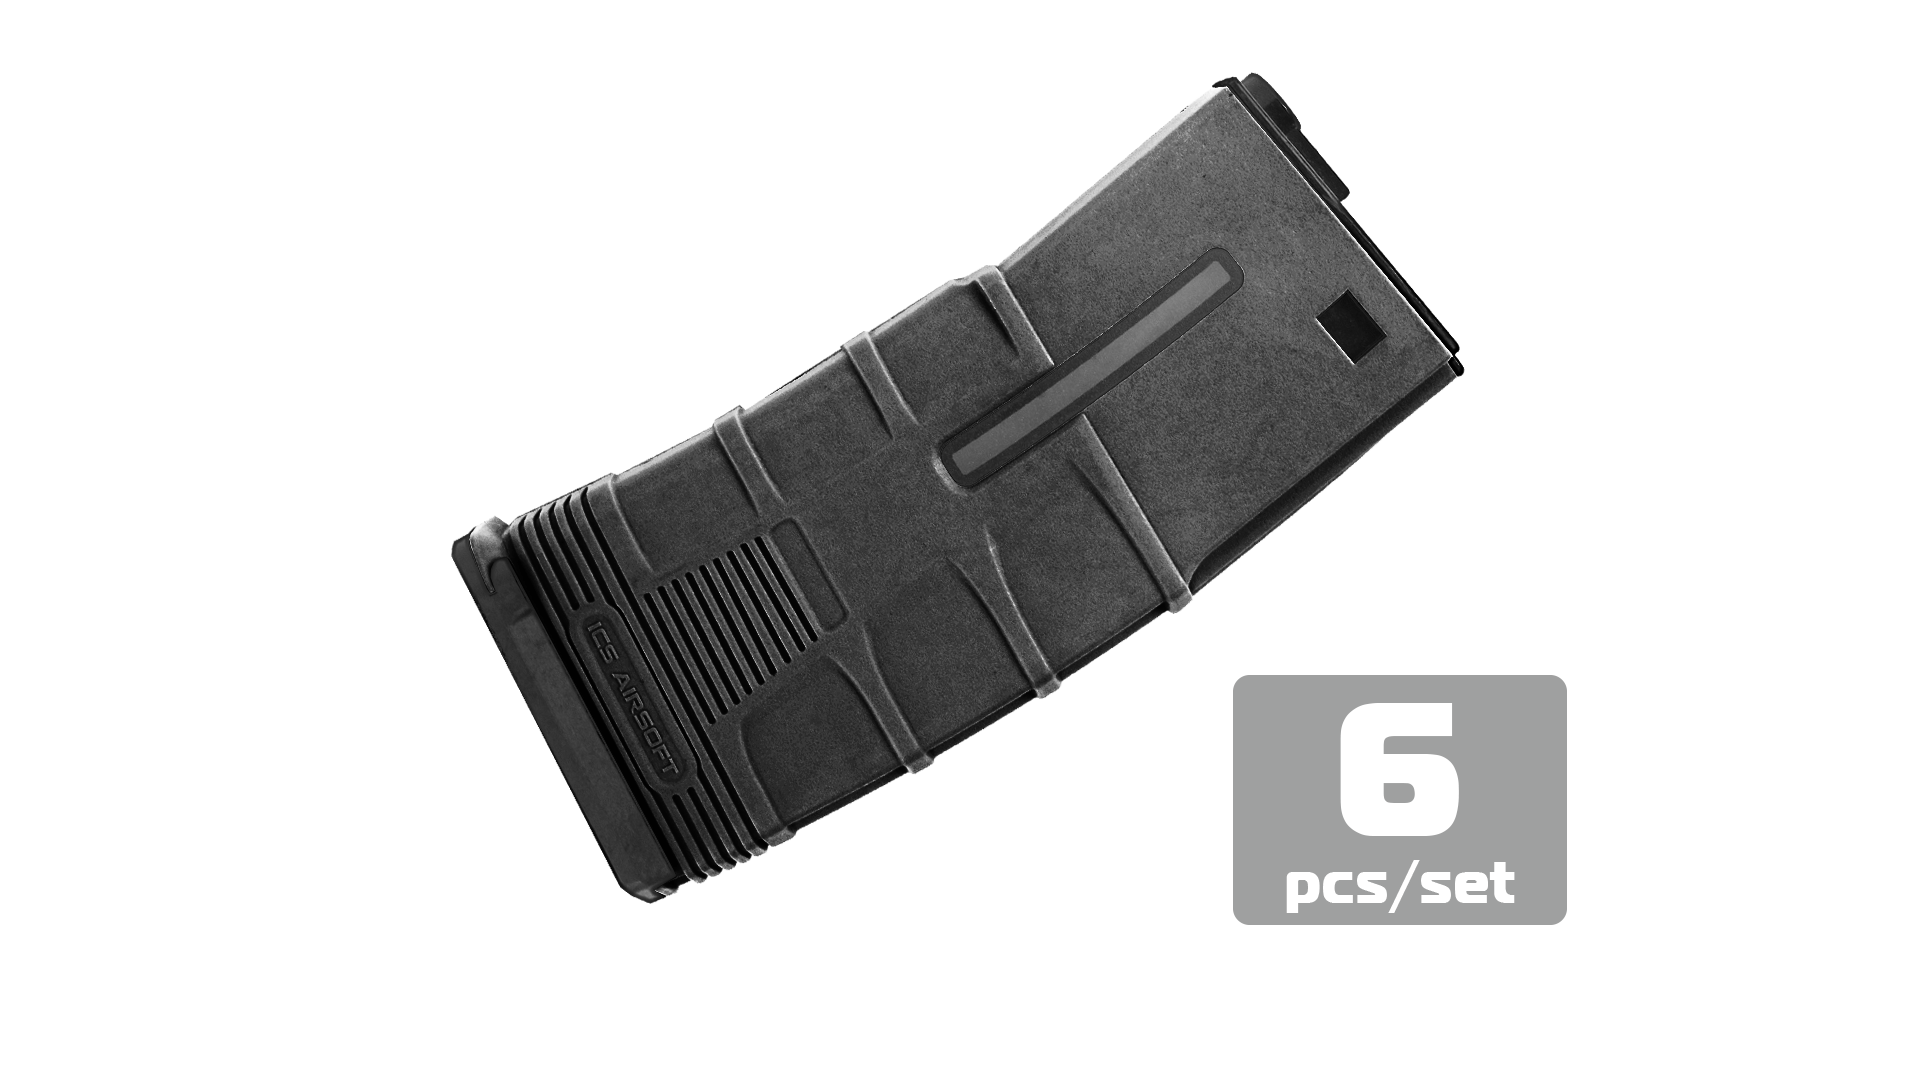 【MA-243】T戰術高容量彈匣 (300發; 6入/組) - 黑色